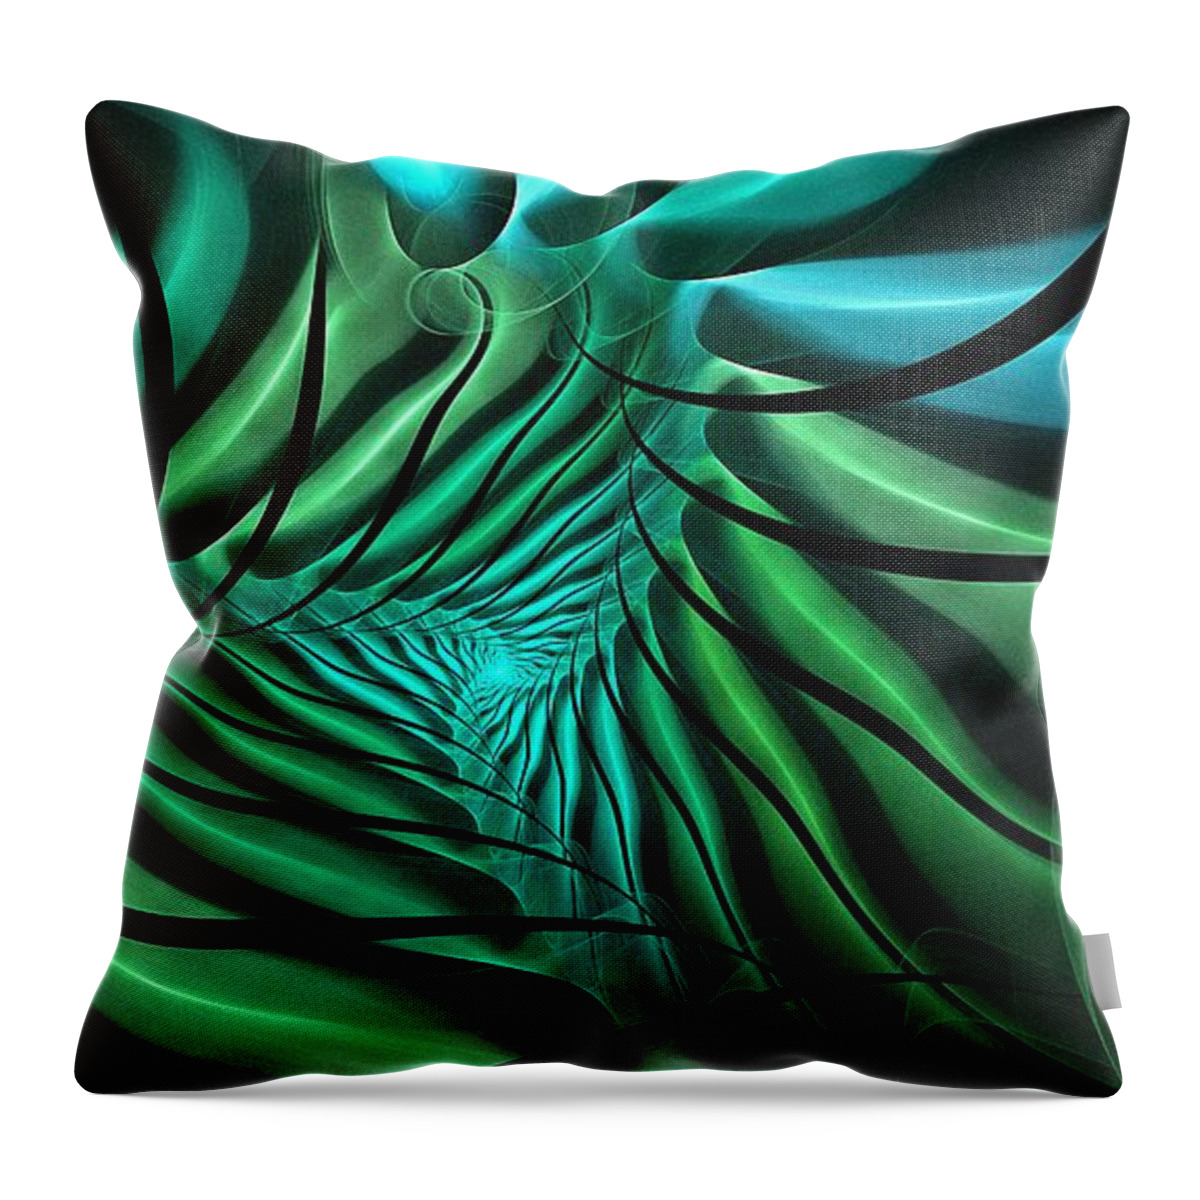 Jigsaw Puzzle Throw Pillow featuring the digital art Slasher Blue Green by Doug Morgan